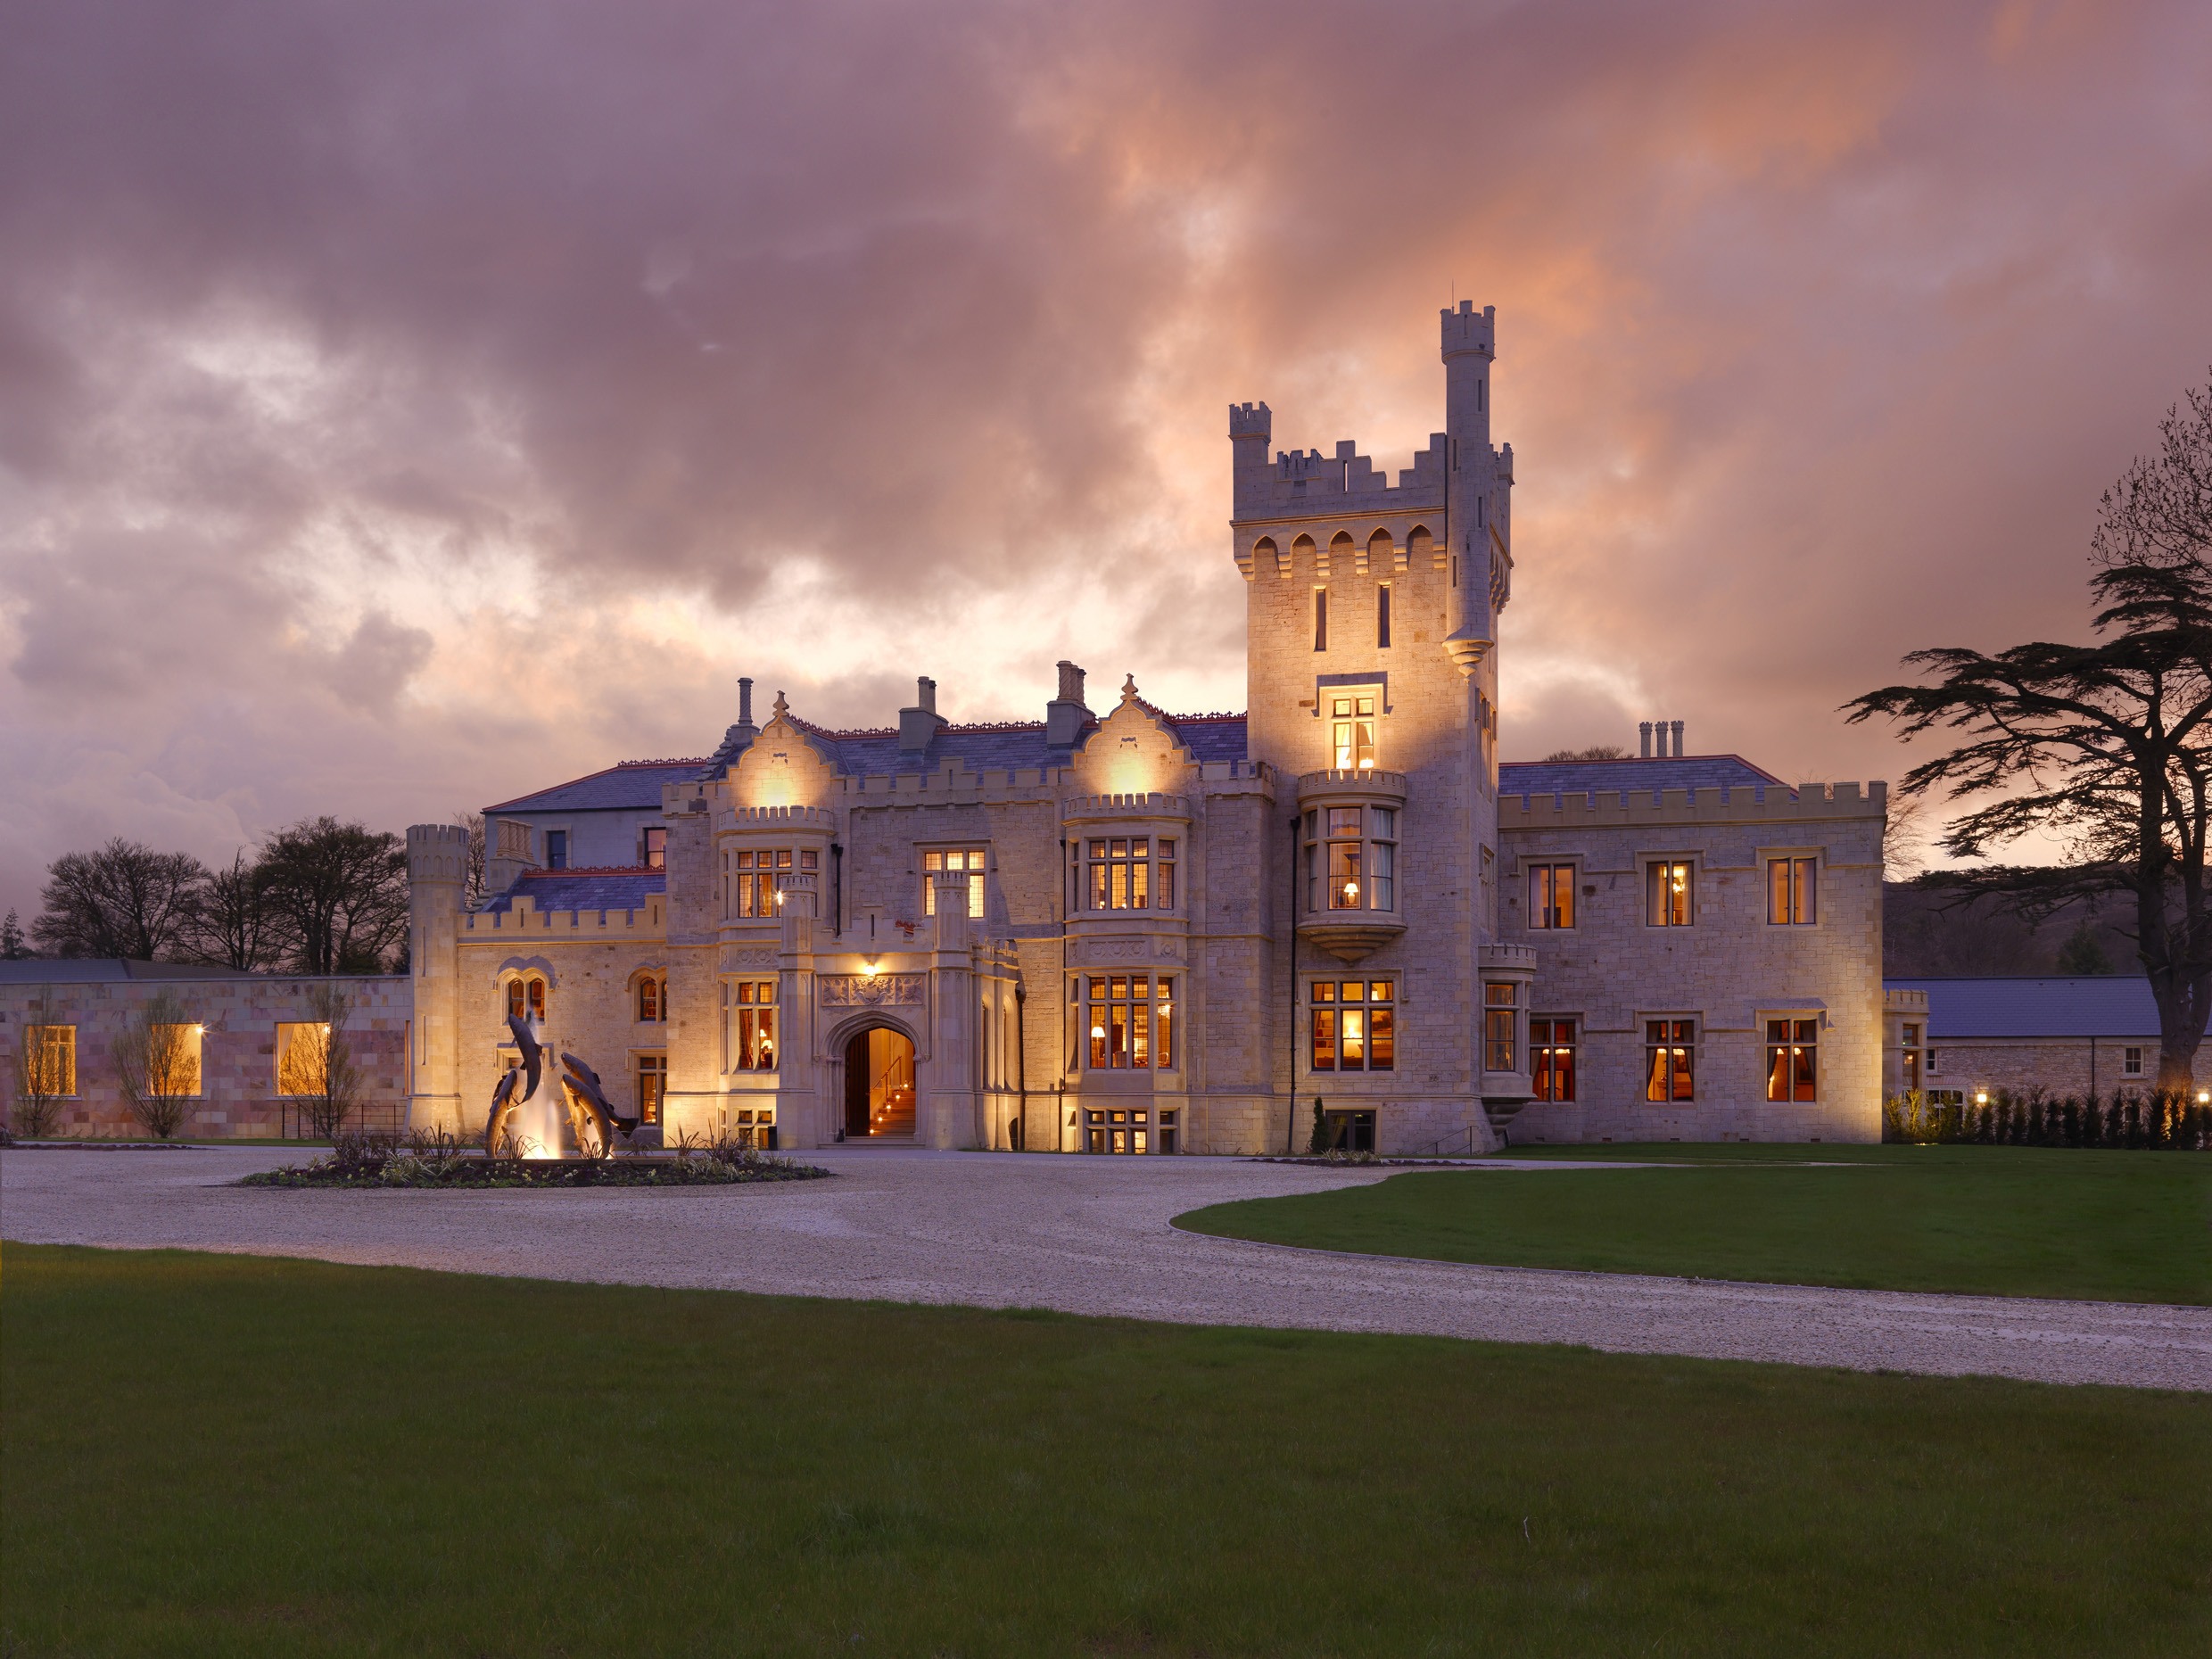 Wedding venues: romantic Irish castles - Absolutely Weddings